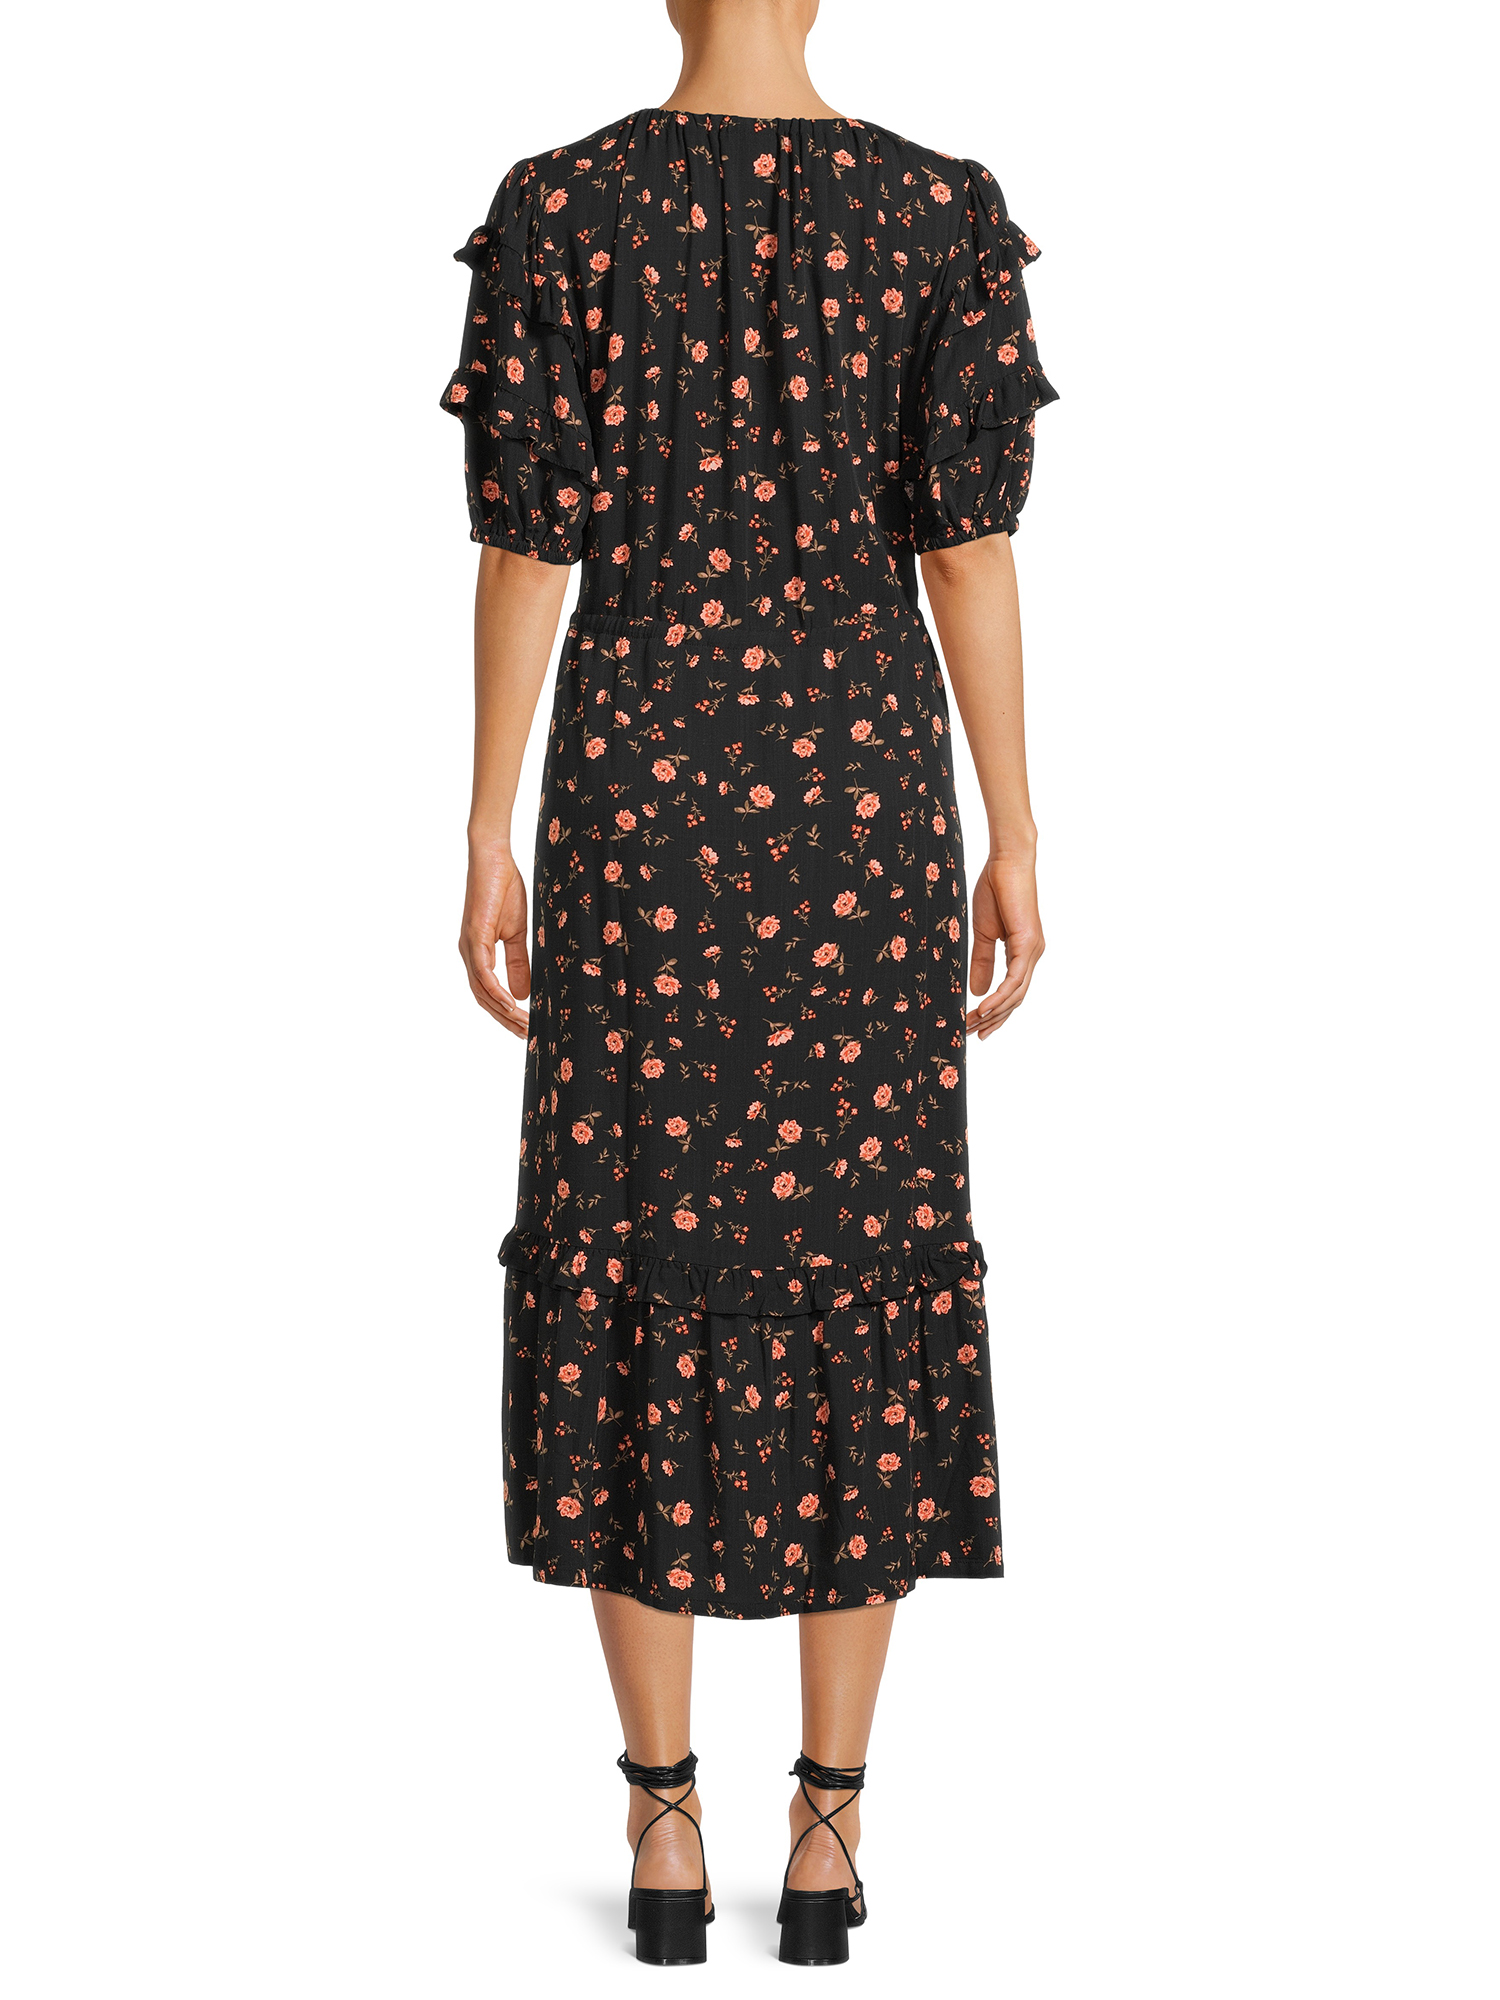 The Get Women's Tiered Ruffle Prairie Midi Dress - image 3 of 5